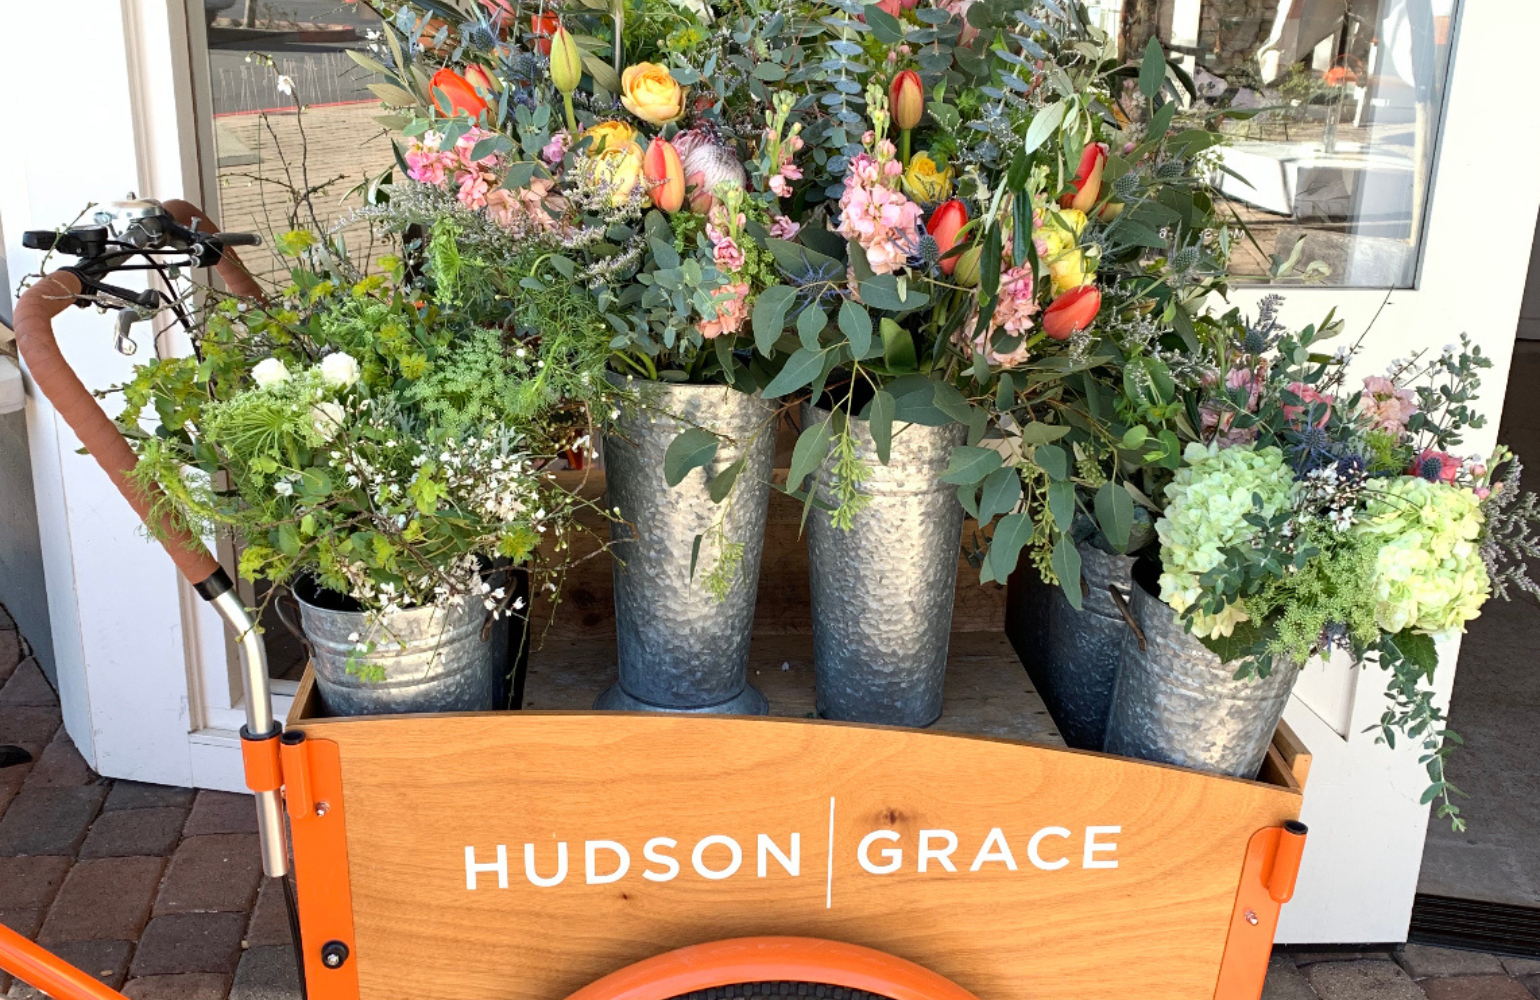 Hudson Grace flowers